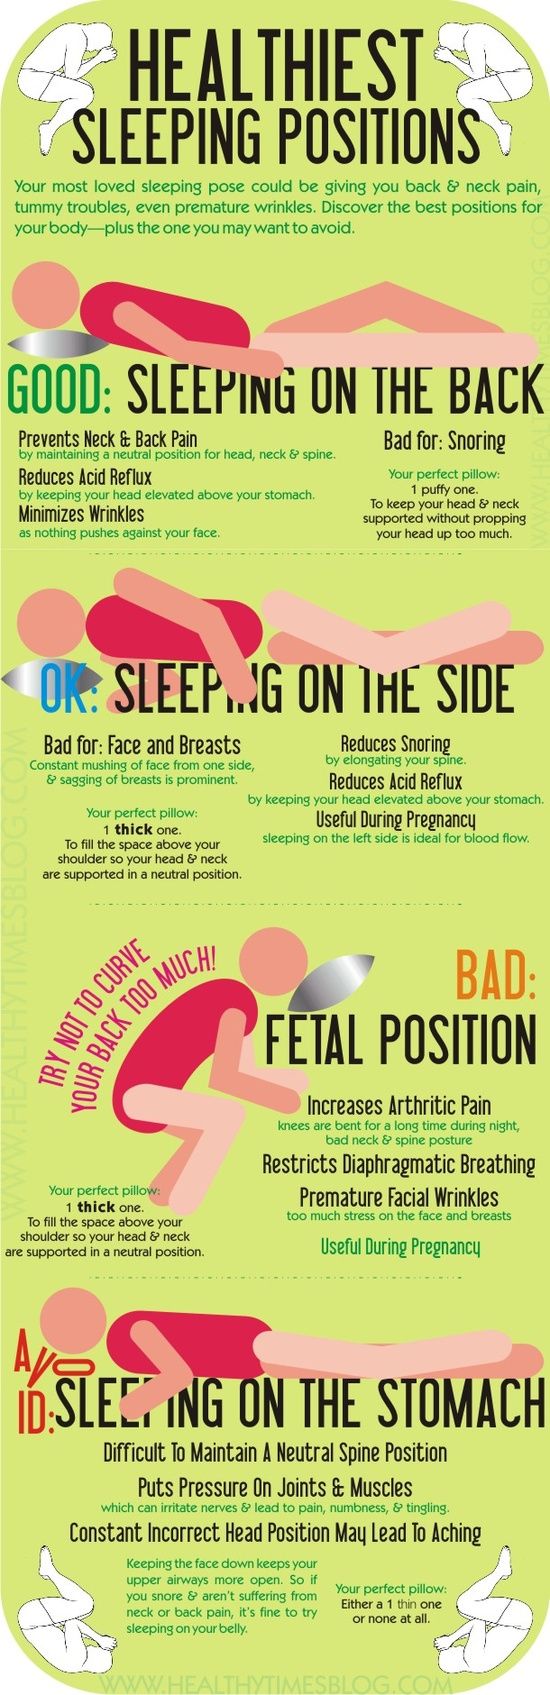 https://www.alignyourhealth.com/images/blogs/healthiest-sleeping-positions-infographic.jpg